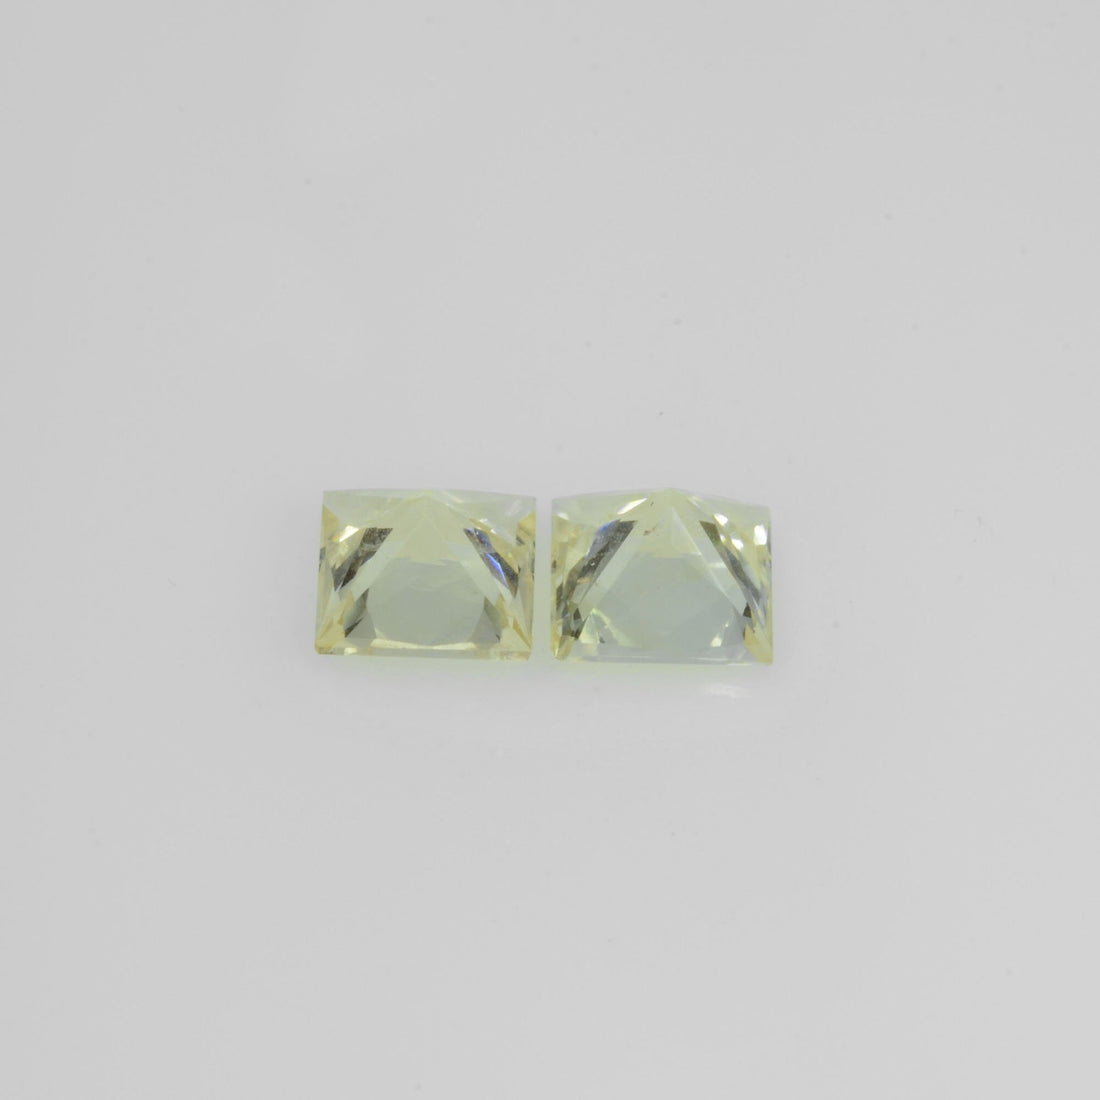 4.8-4.9 mm Natural Yellow Sapphire Loose Pair Gemstone Princess Cut